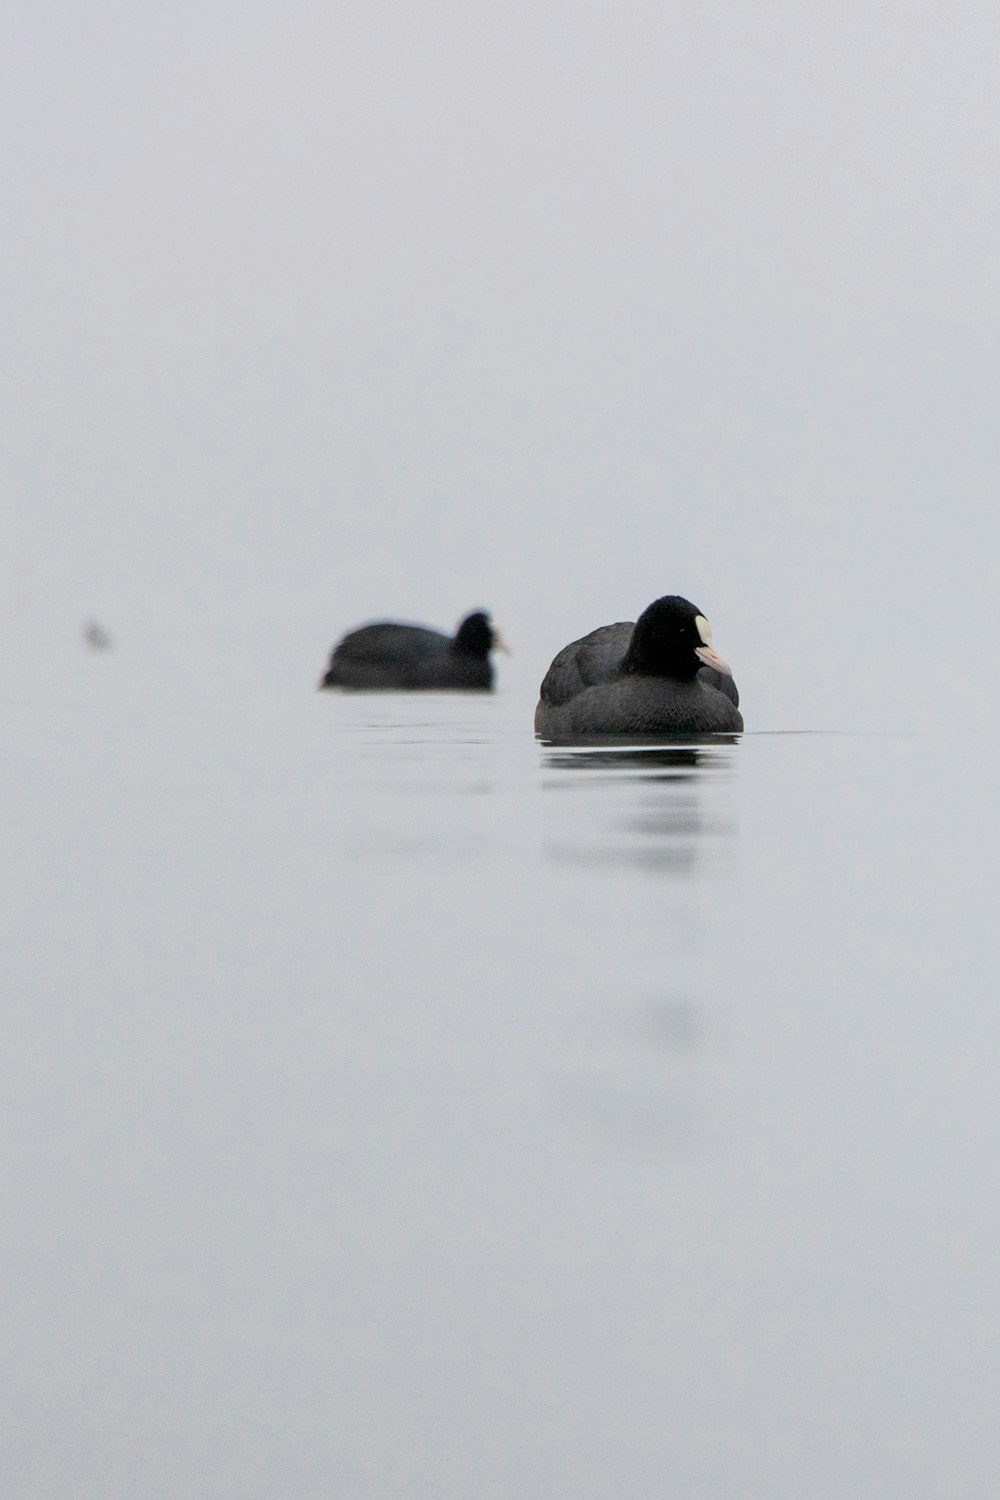 2 black duck on water